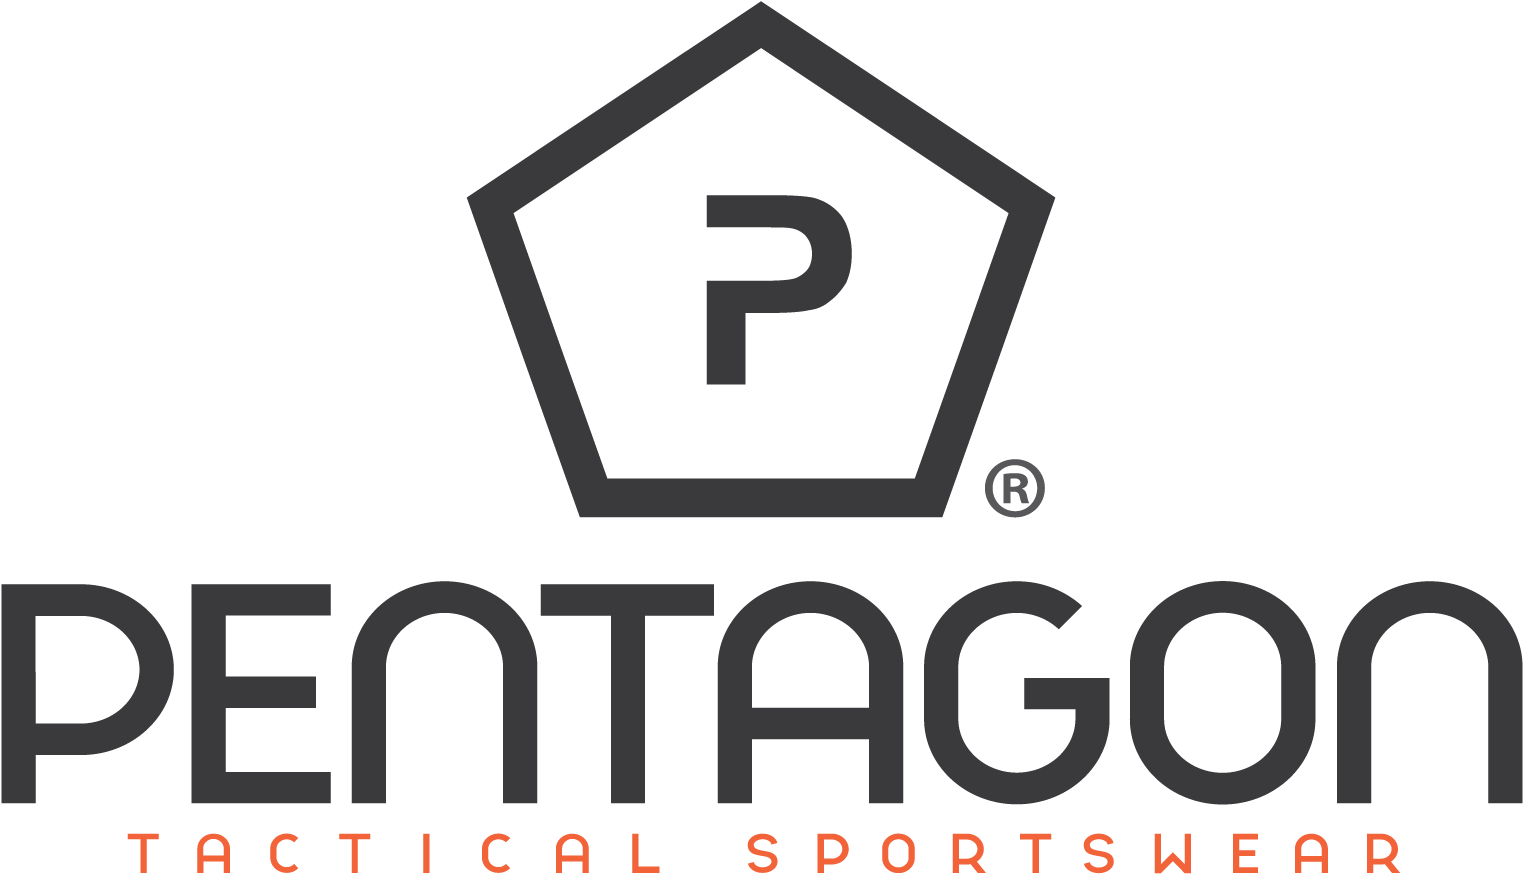 Pentagon Tactical Sportswear Logo PNG image